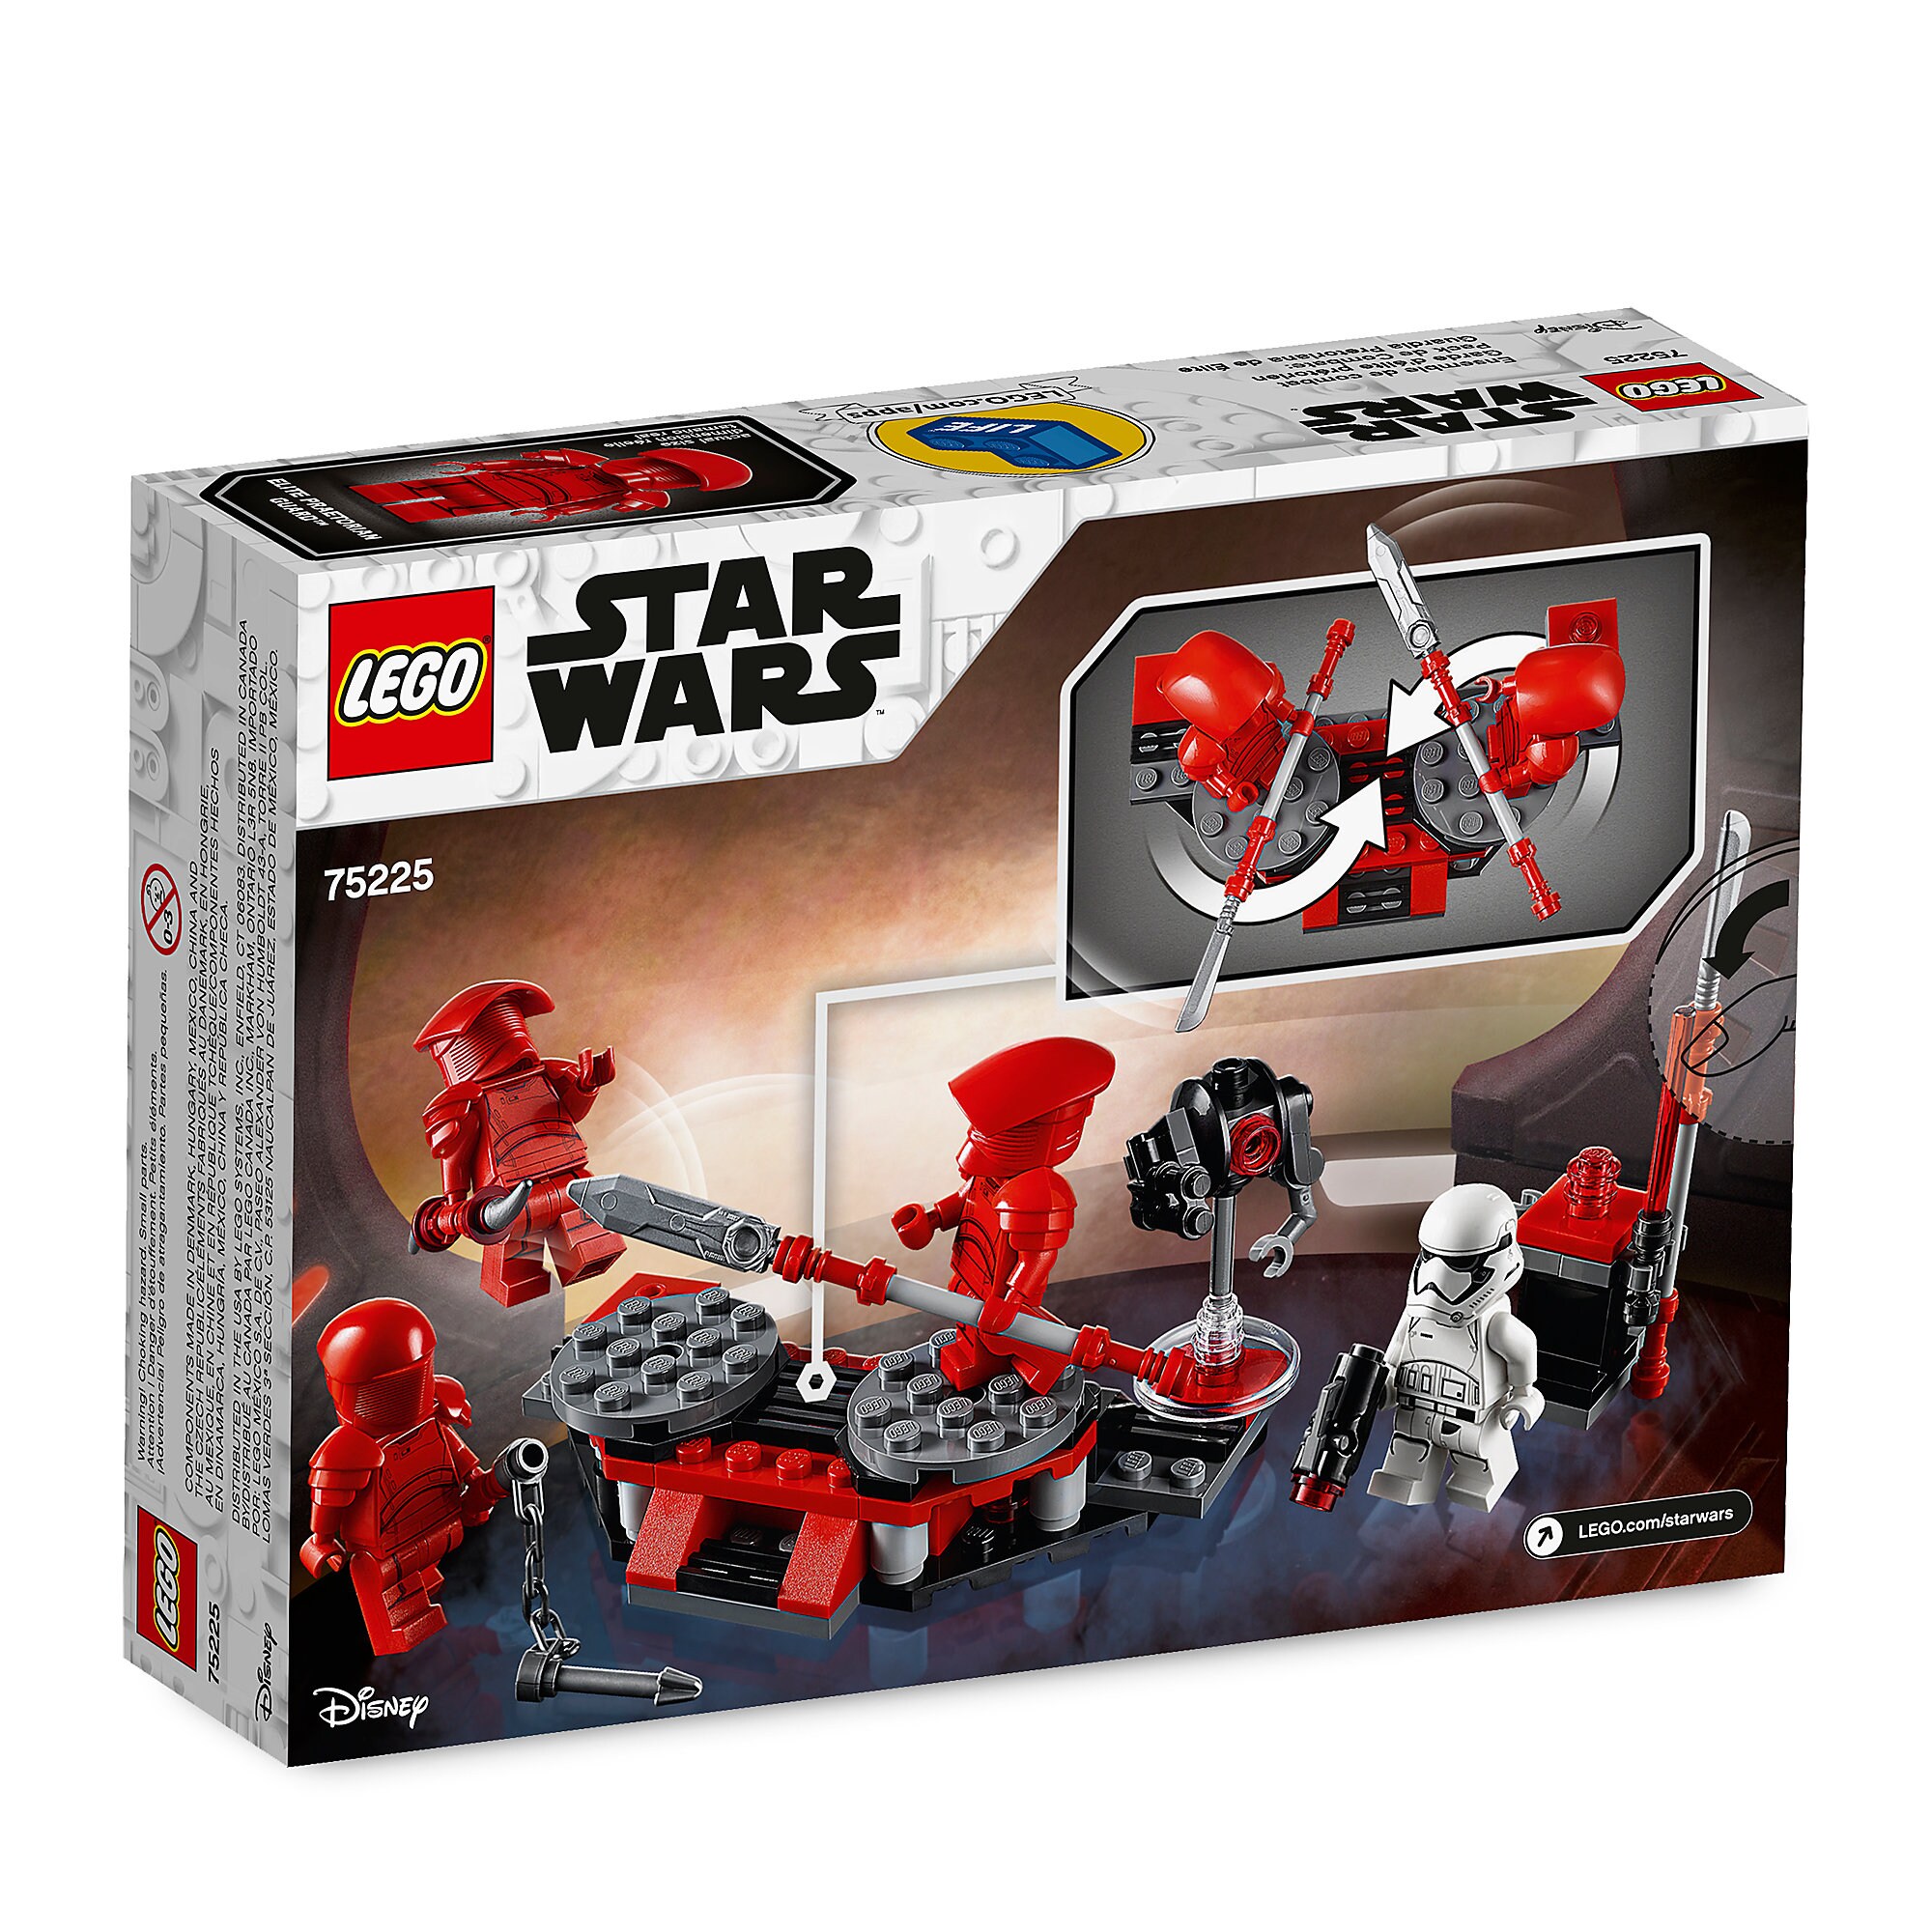 Elite Praetorian Guard Battle Pack Playset by LEGO - Star Wars: The Last Jedi